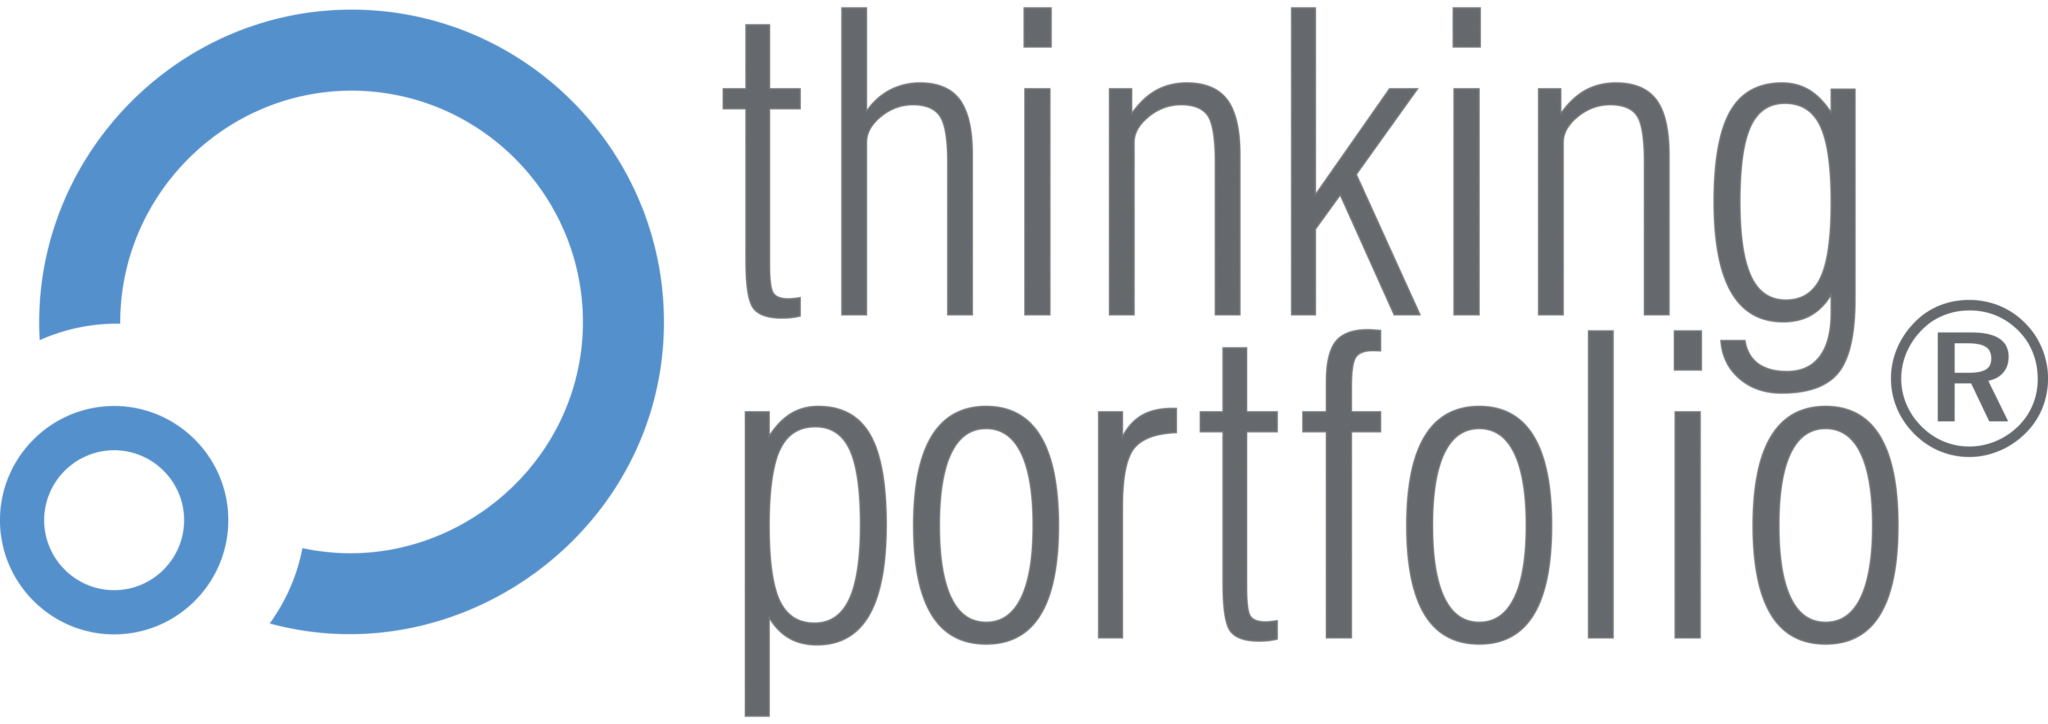 Thinking portfolio logo